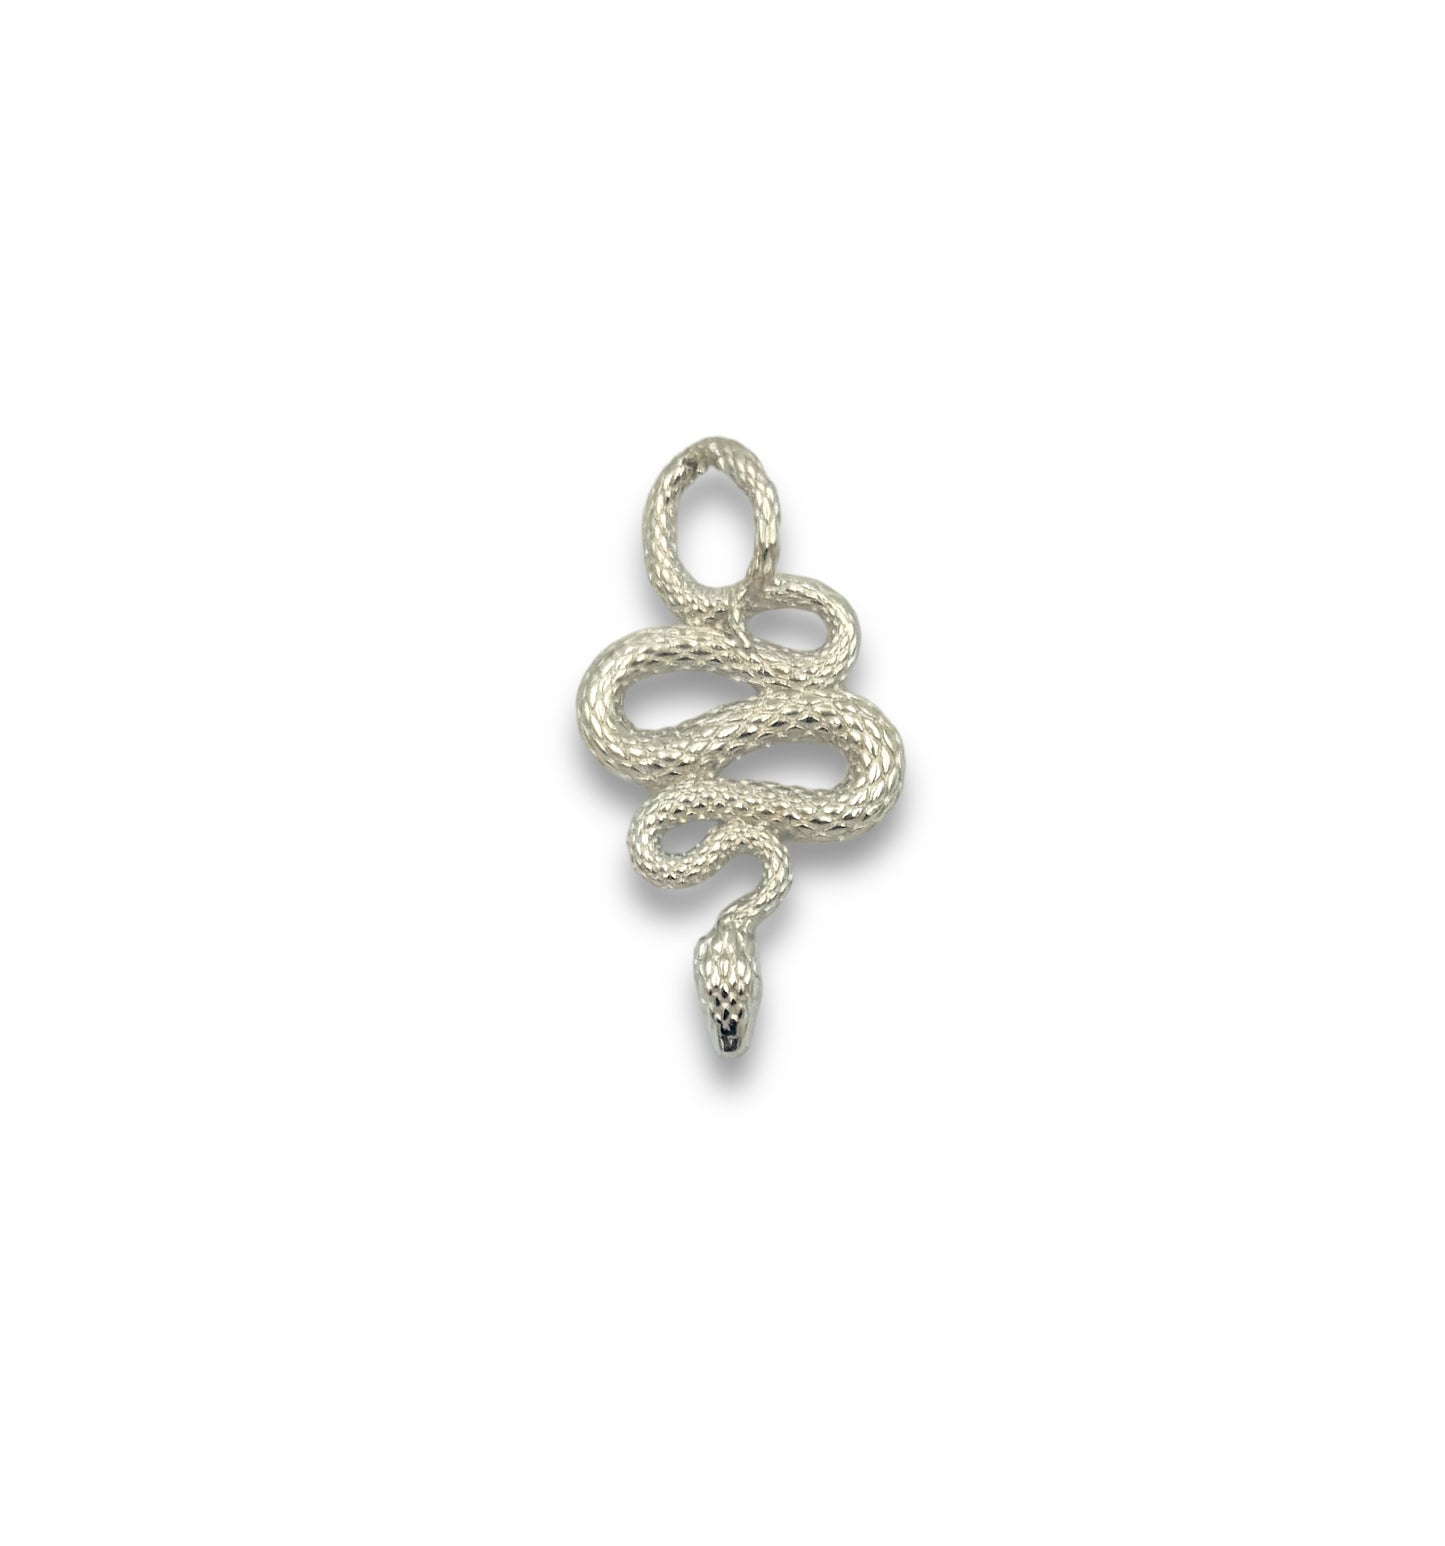 Silver Snake design pendant